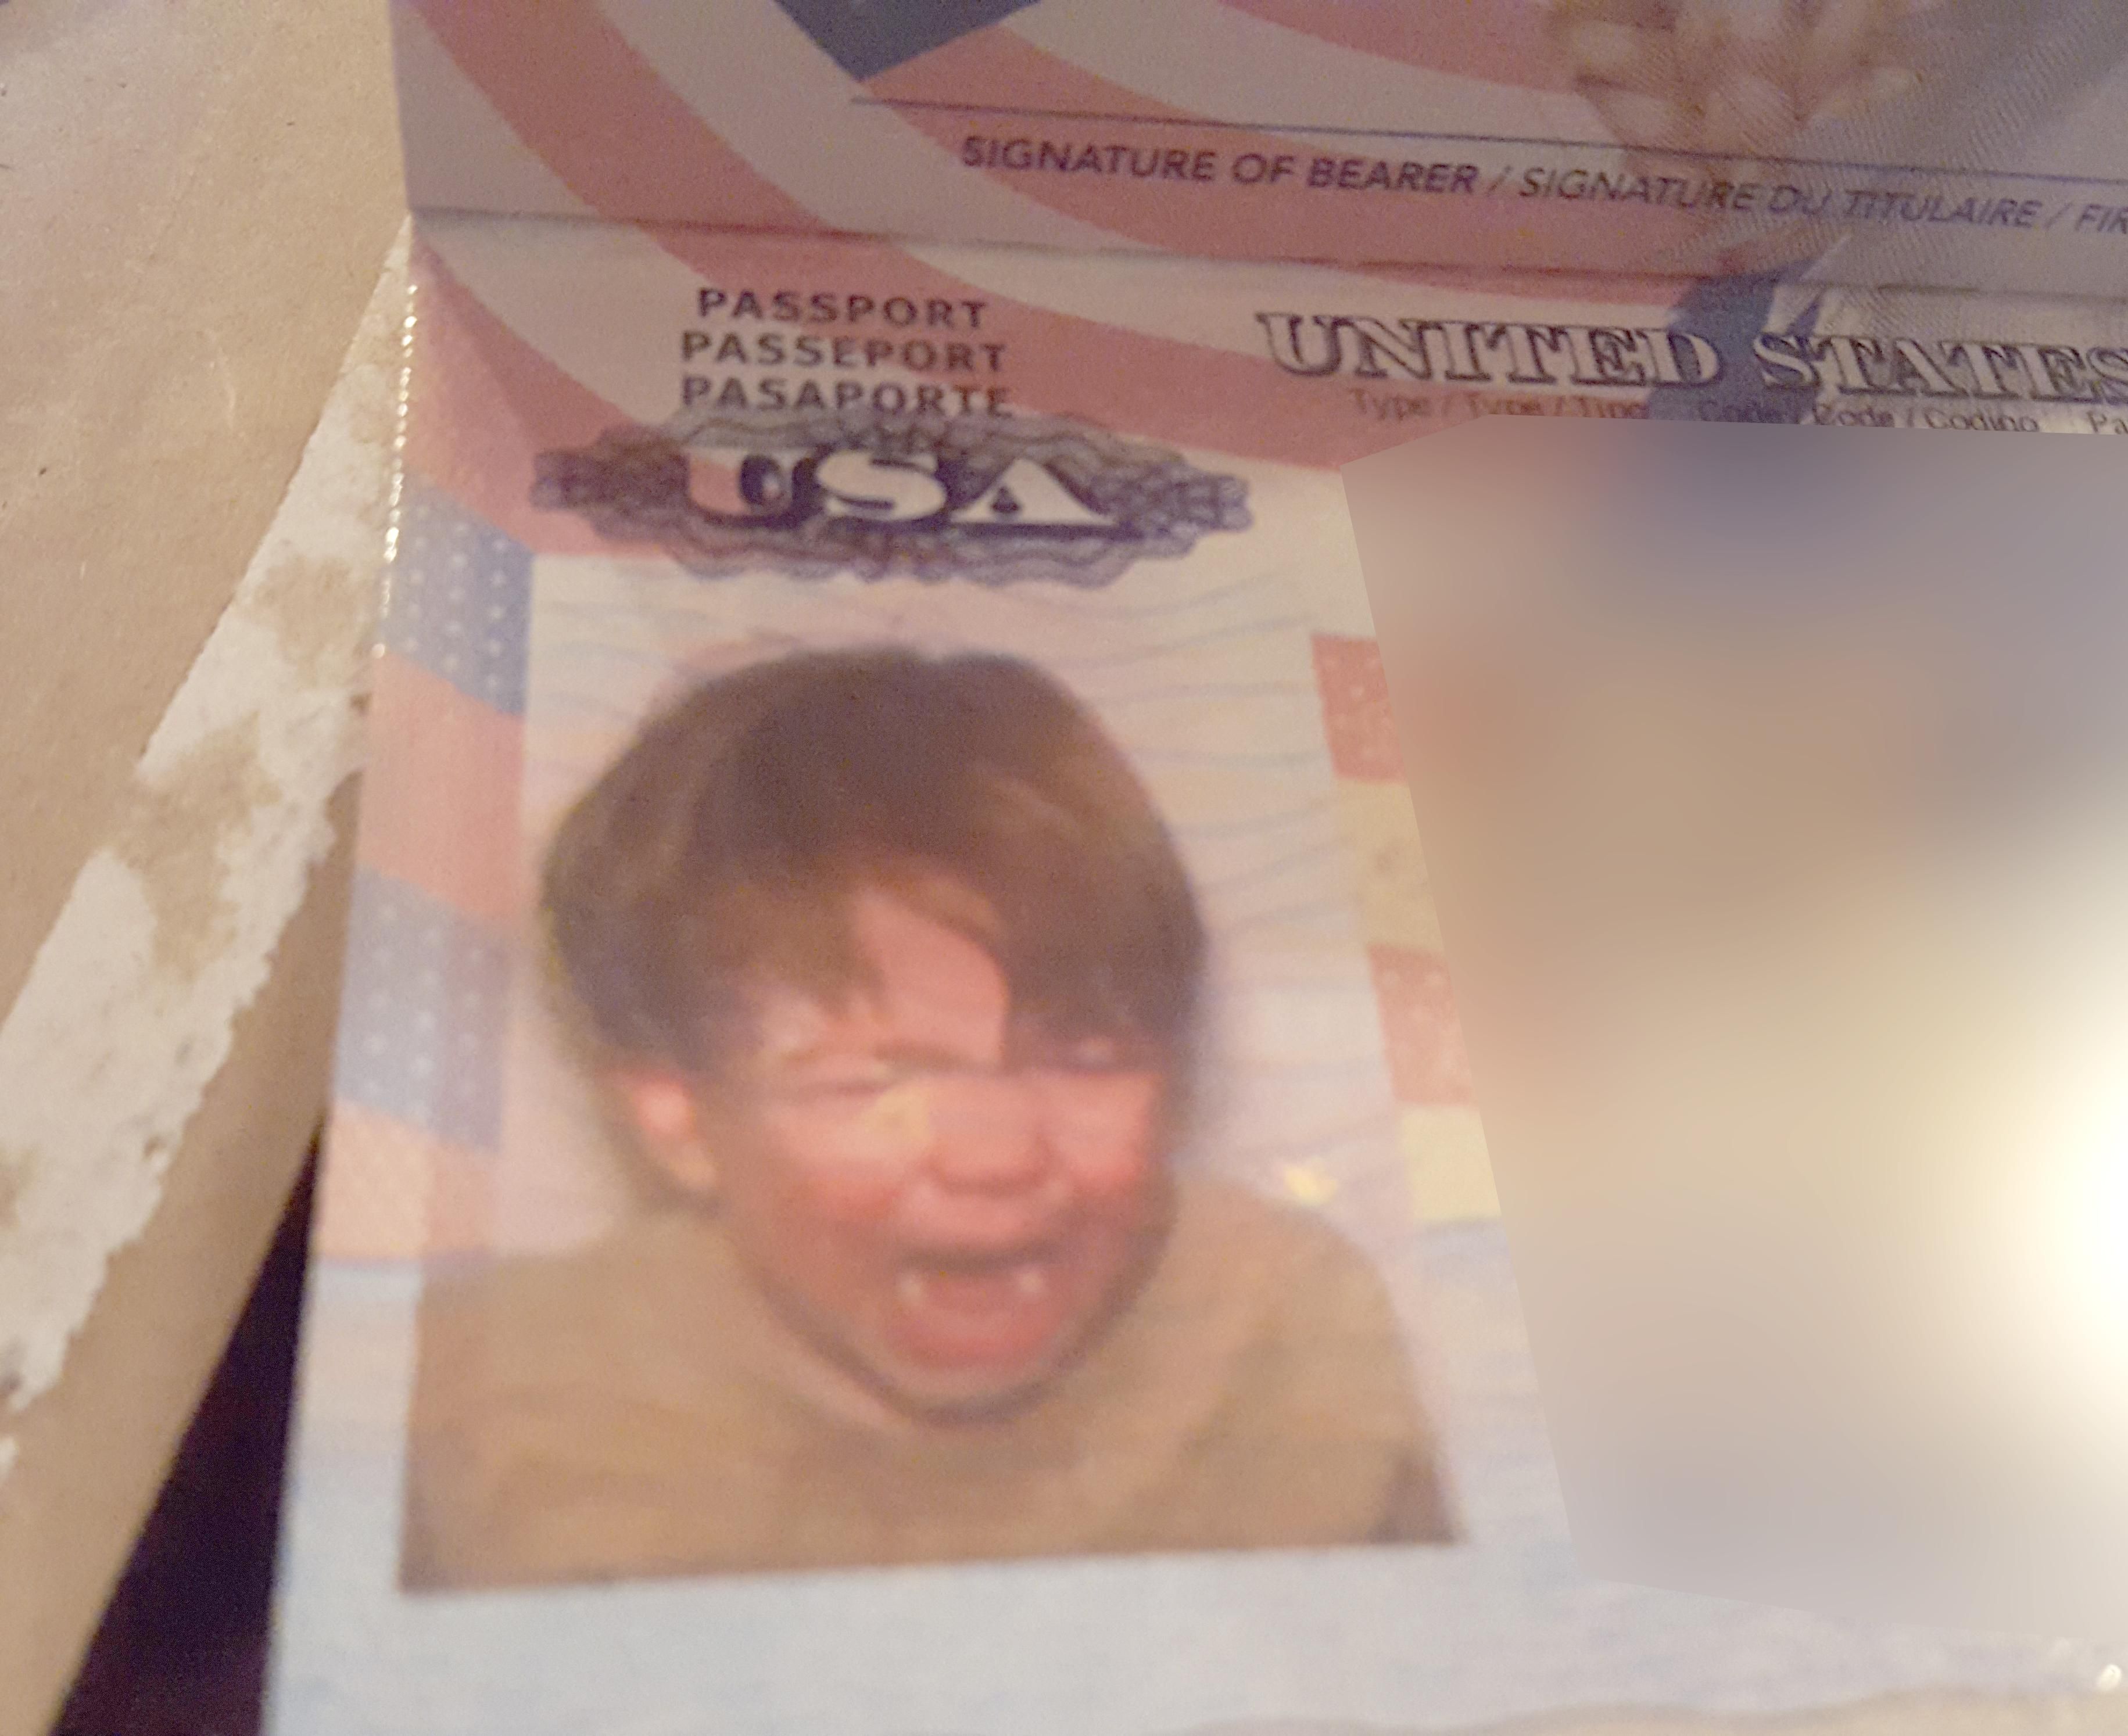 The State Department nailed my nephew's passport